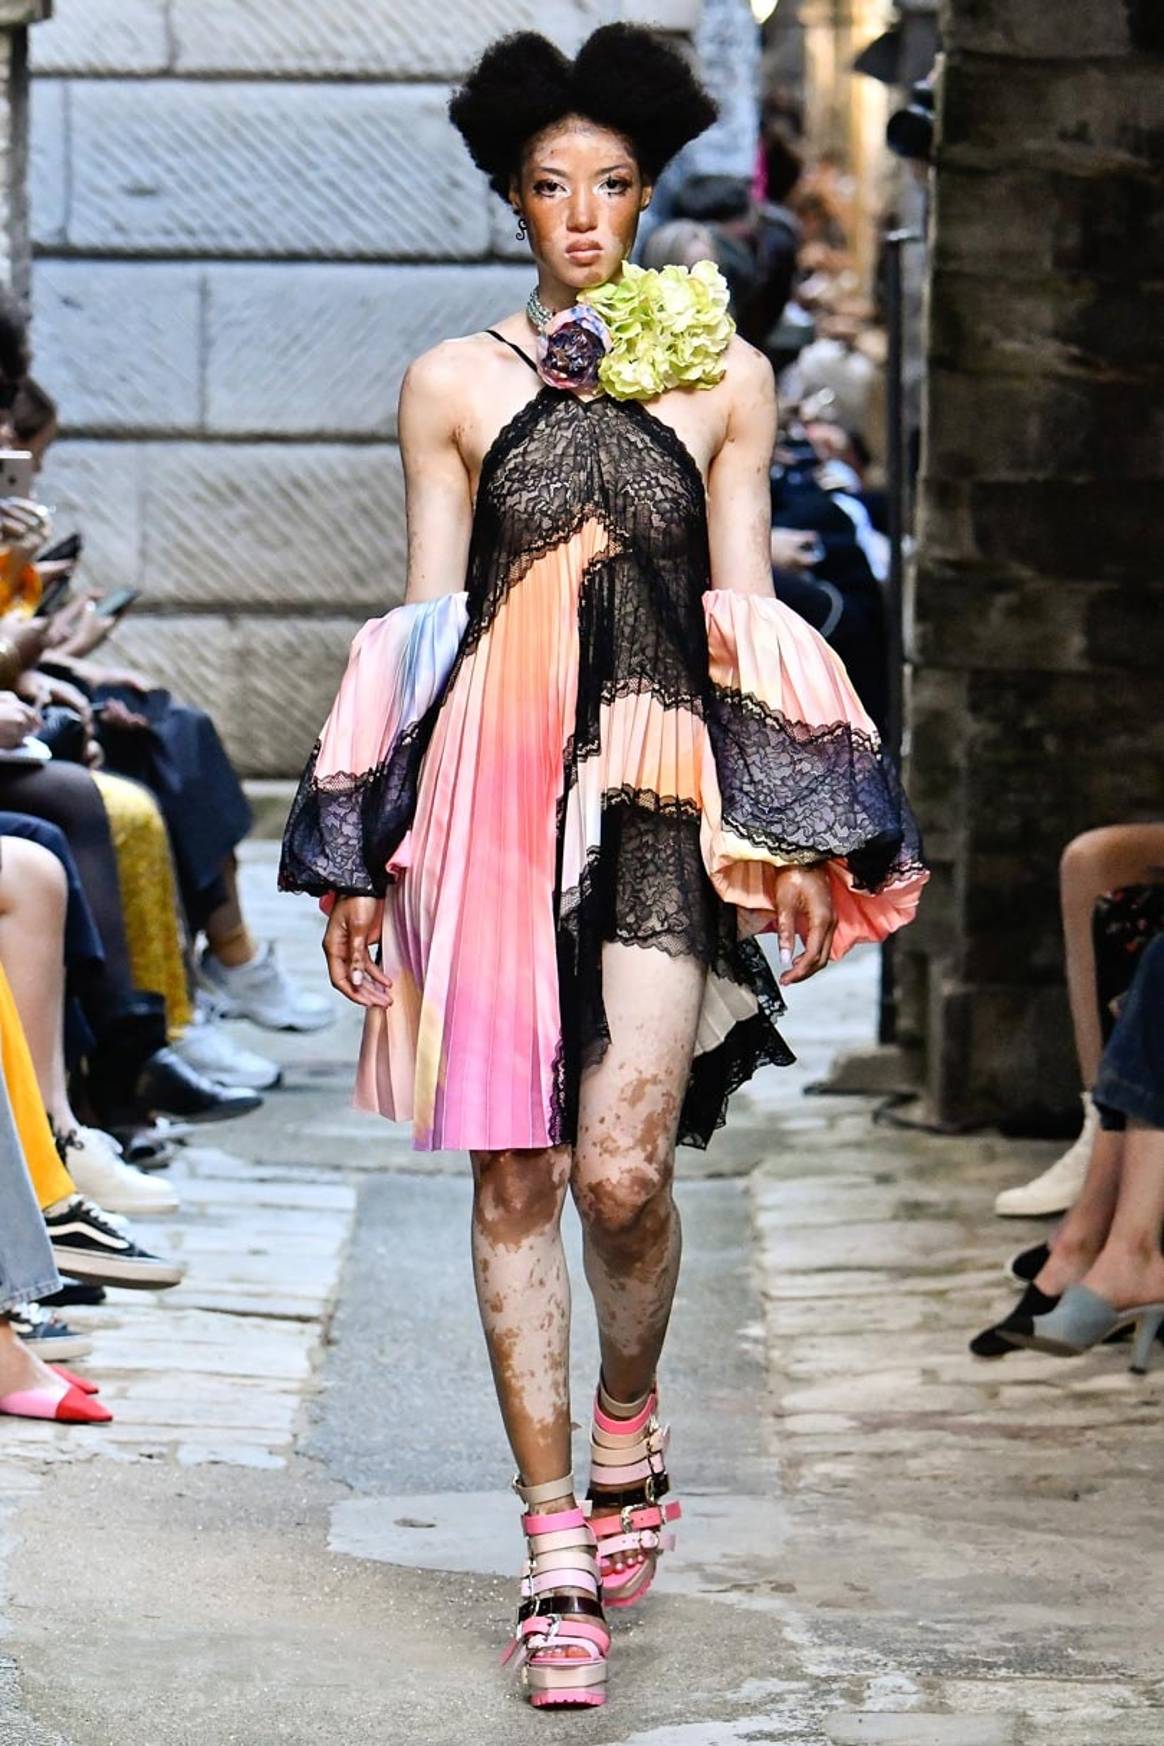 Dresses flow for Beckham, billow for Goddard: London fashion trends